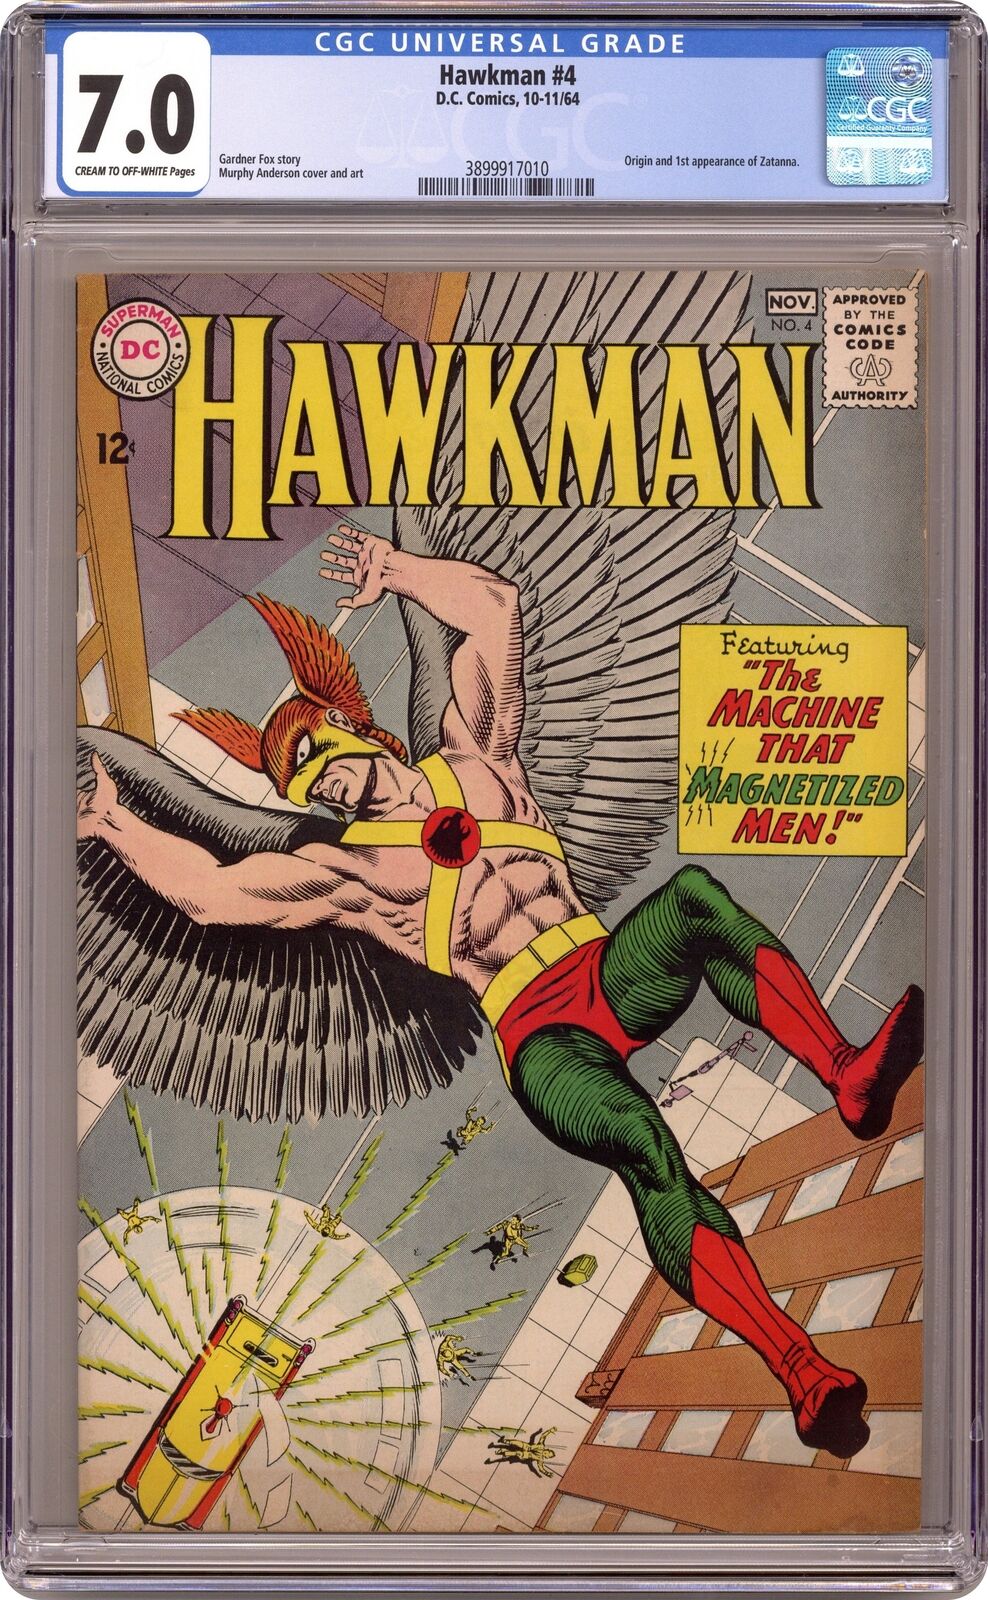 Hawkman #4 CGC 7.0 1964 3899917010 1st app. and origin Zatanna